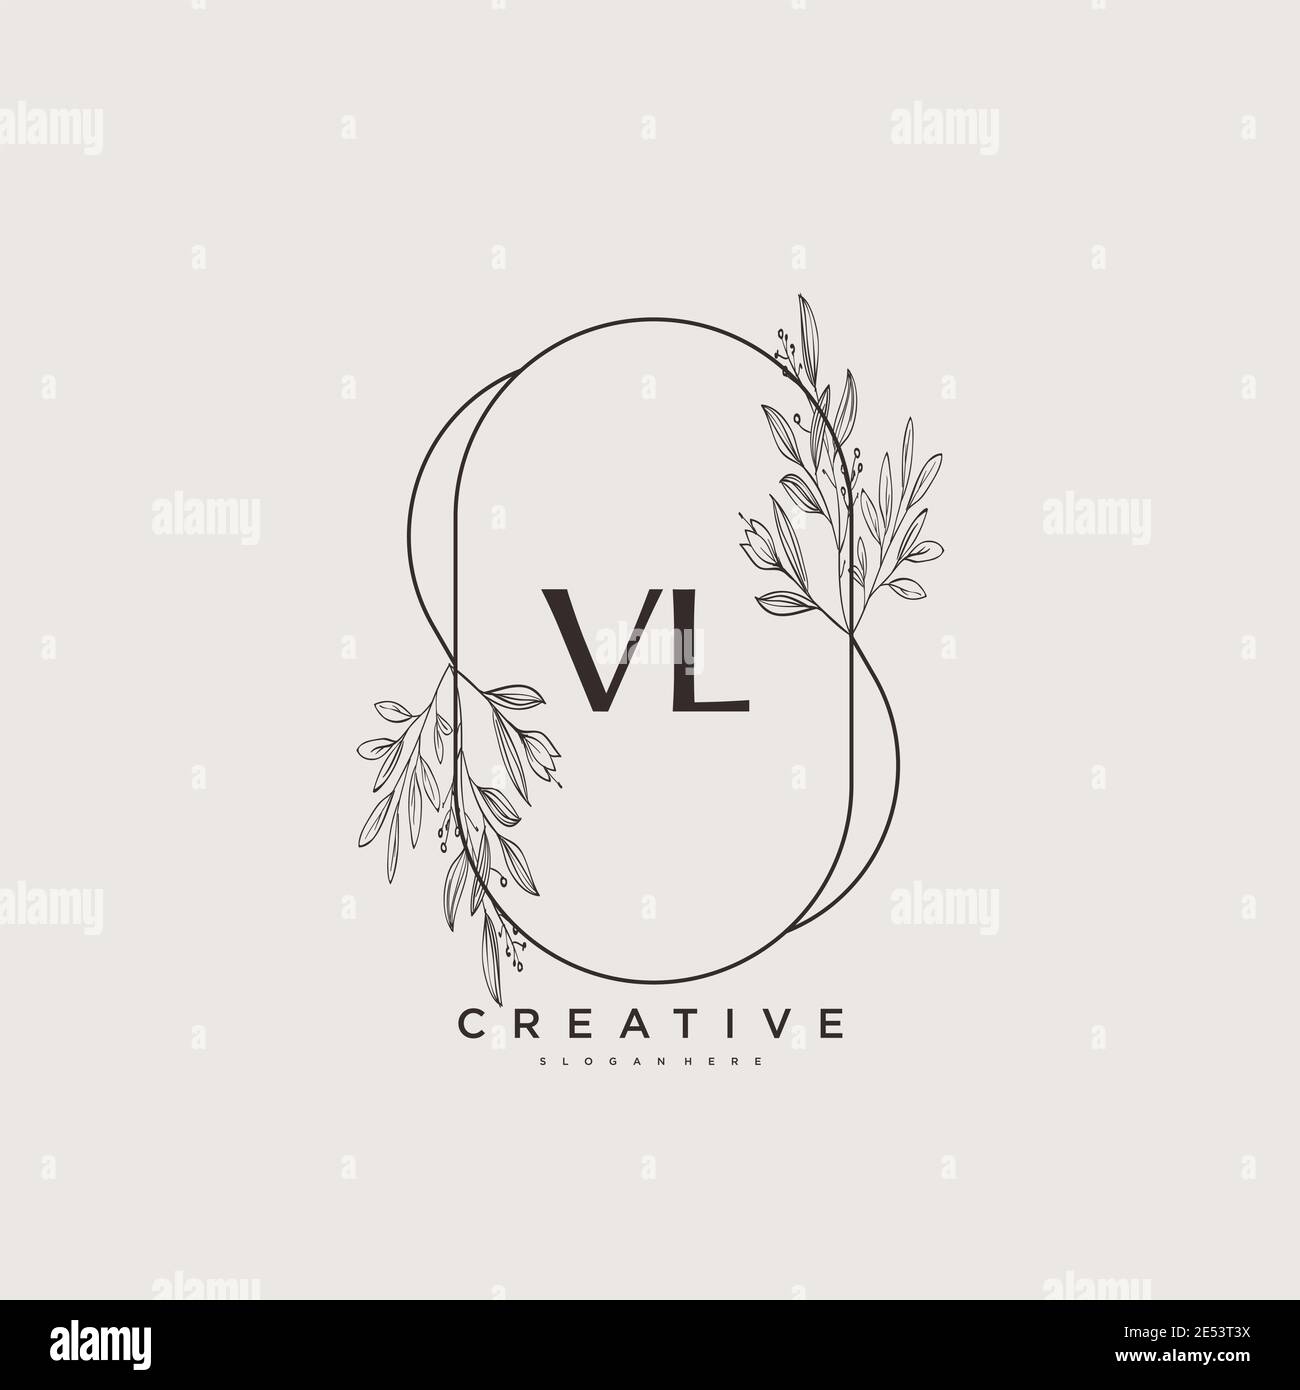 LV Initial handwriting logo vector Stock Vector Image & Art - Alamy